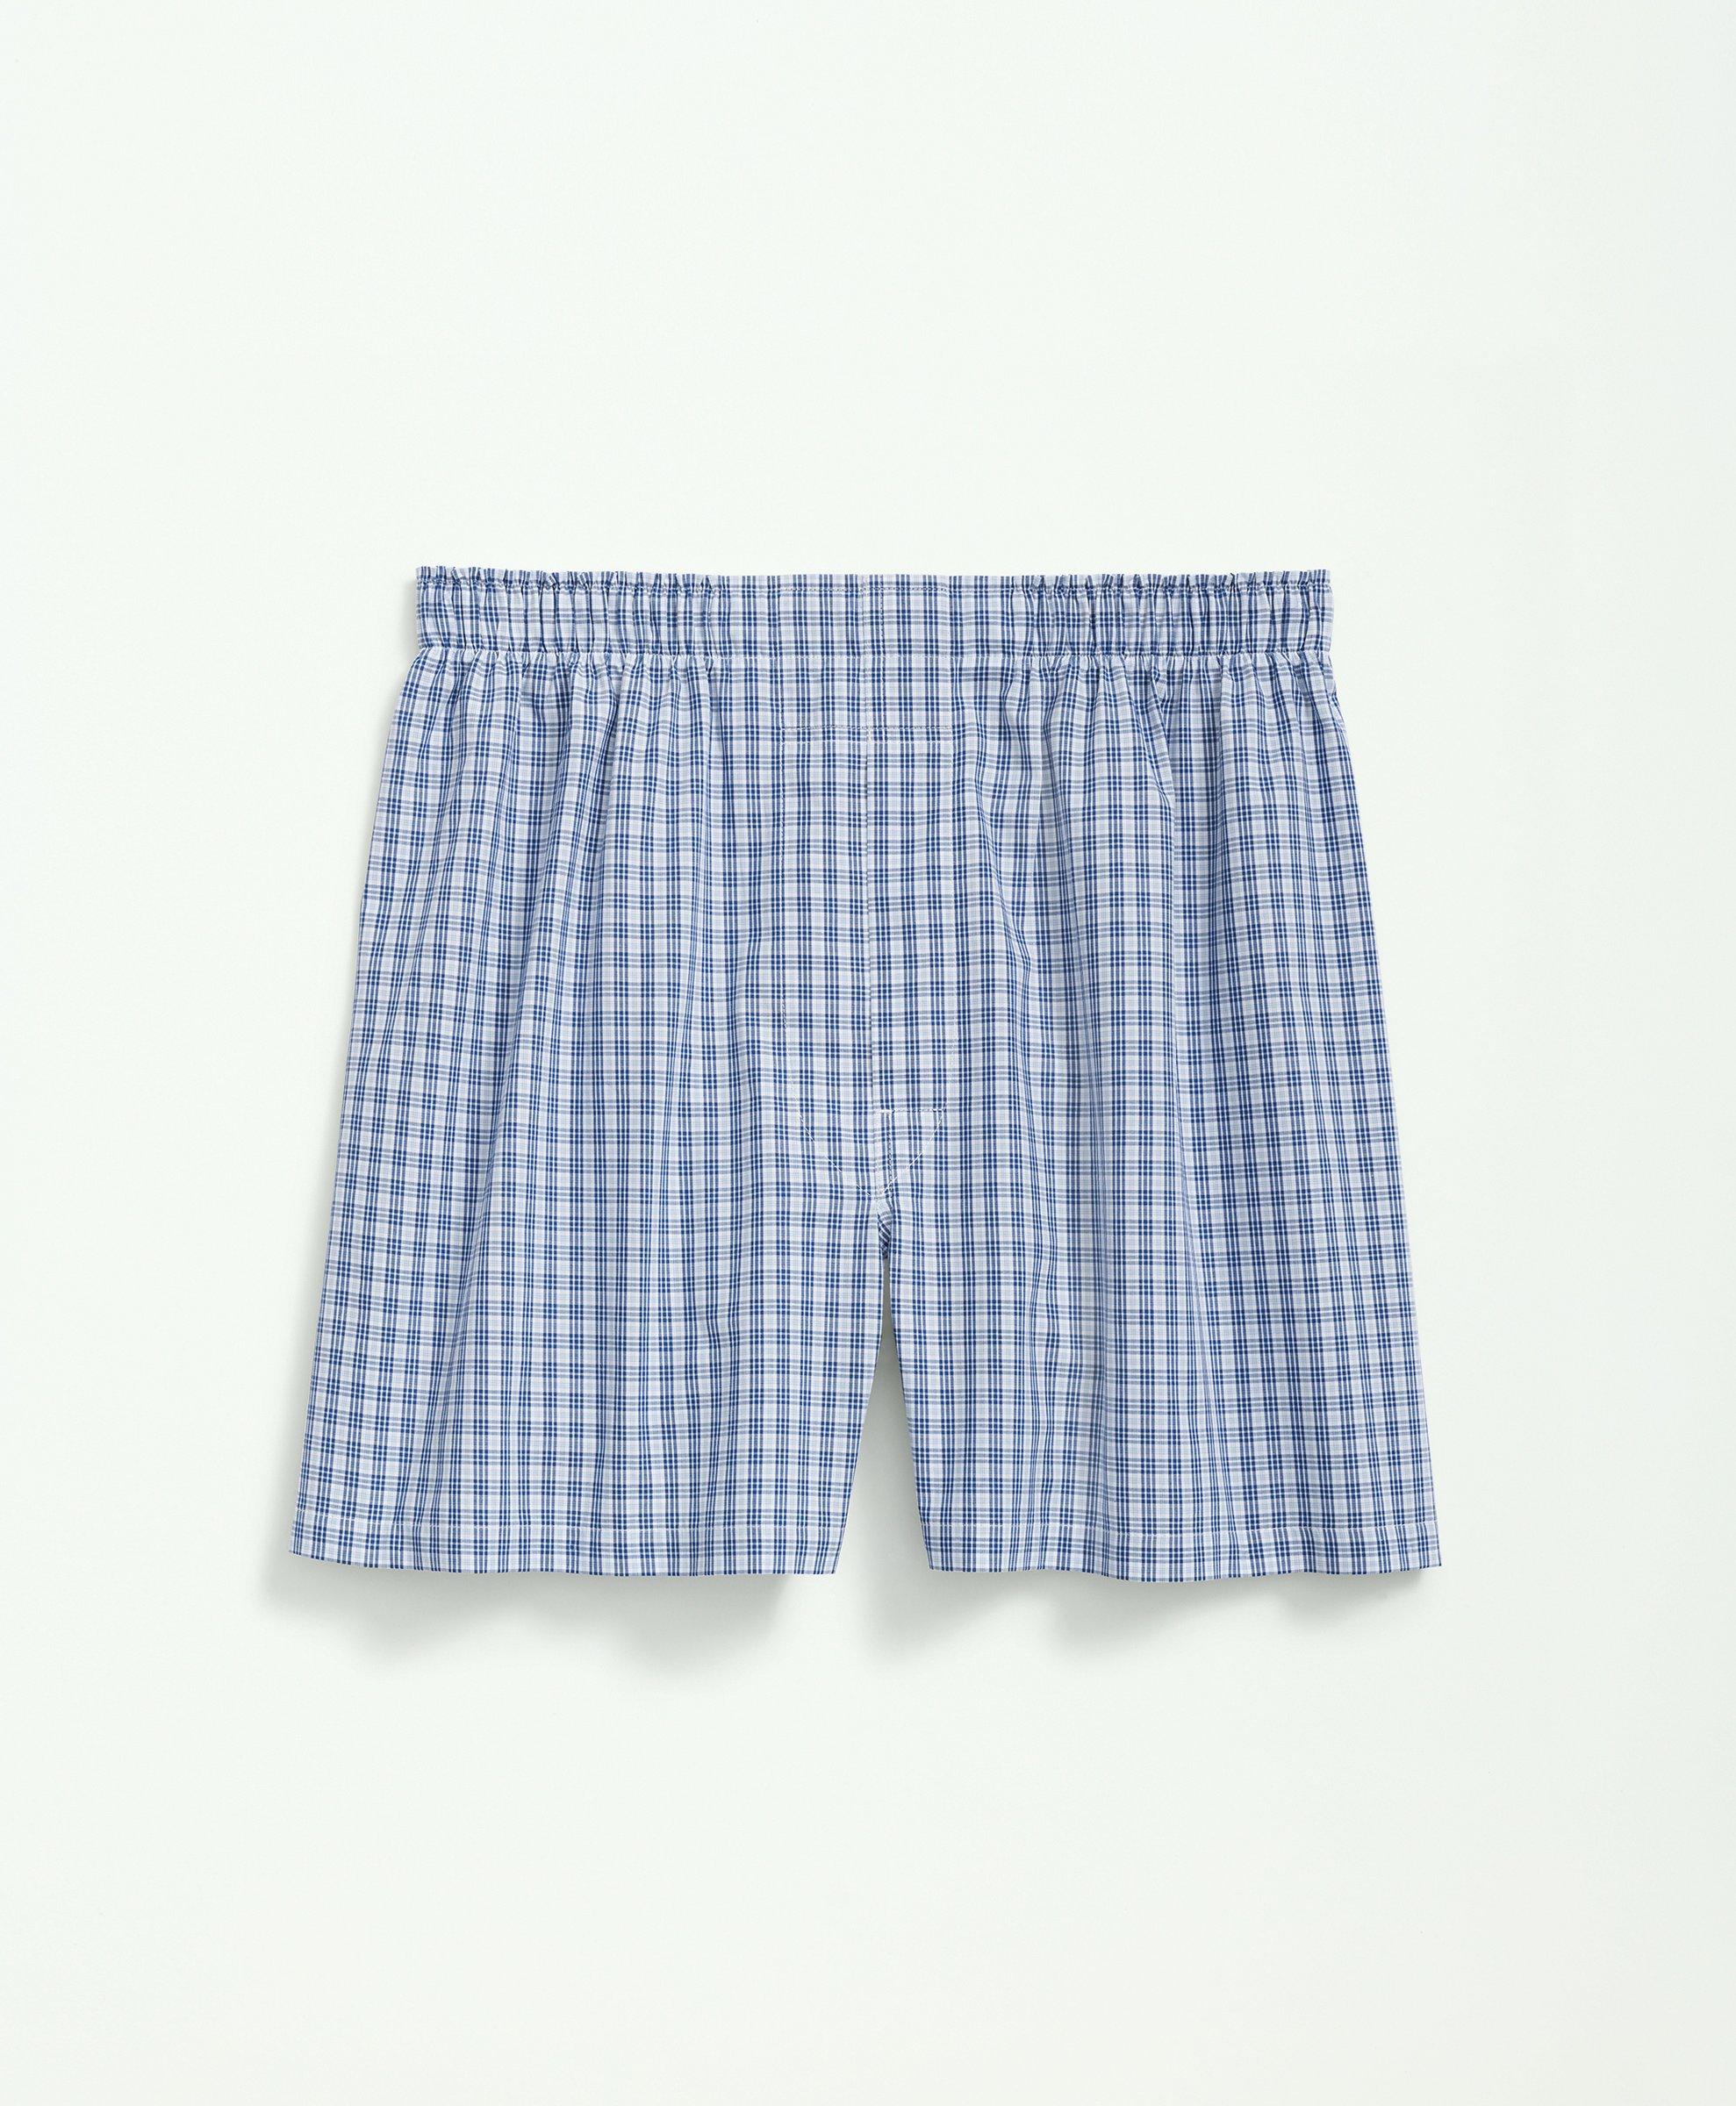 GAP, Underwear & Socks, Gap Mens 0 Cotton Boxers Size L Bundle Of 2 Grey  Blue Nwt